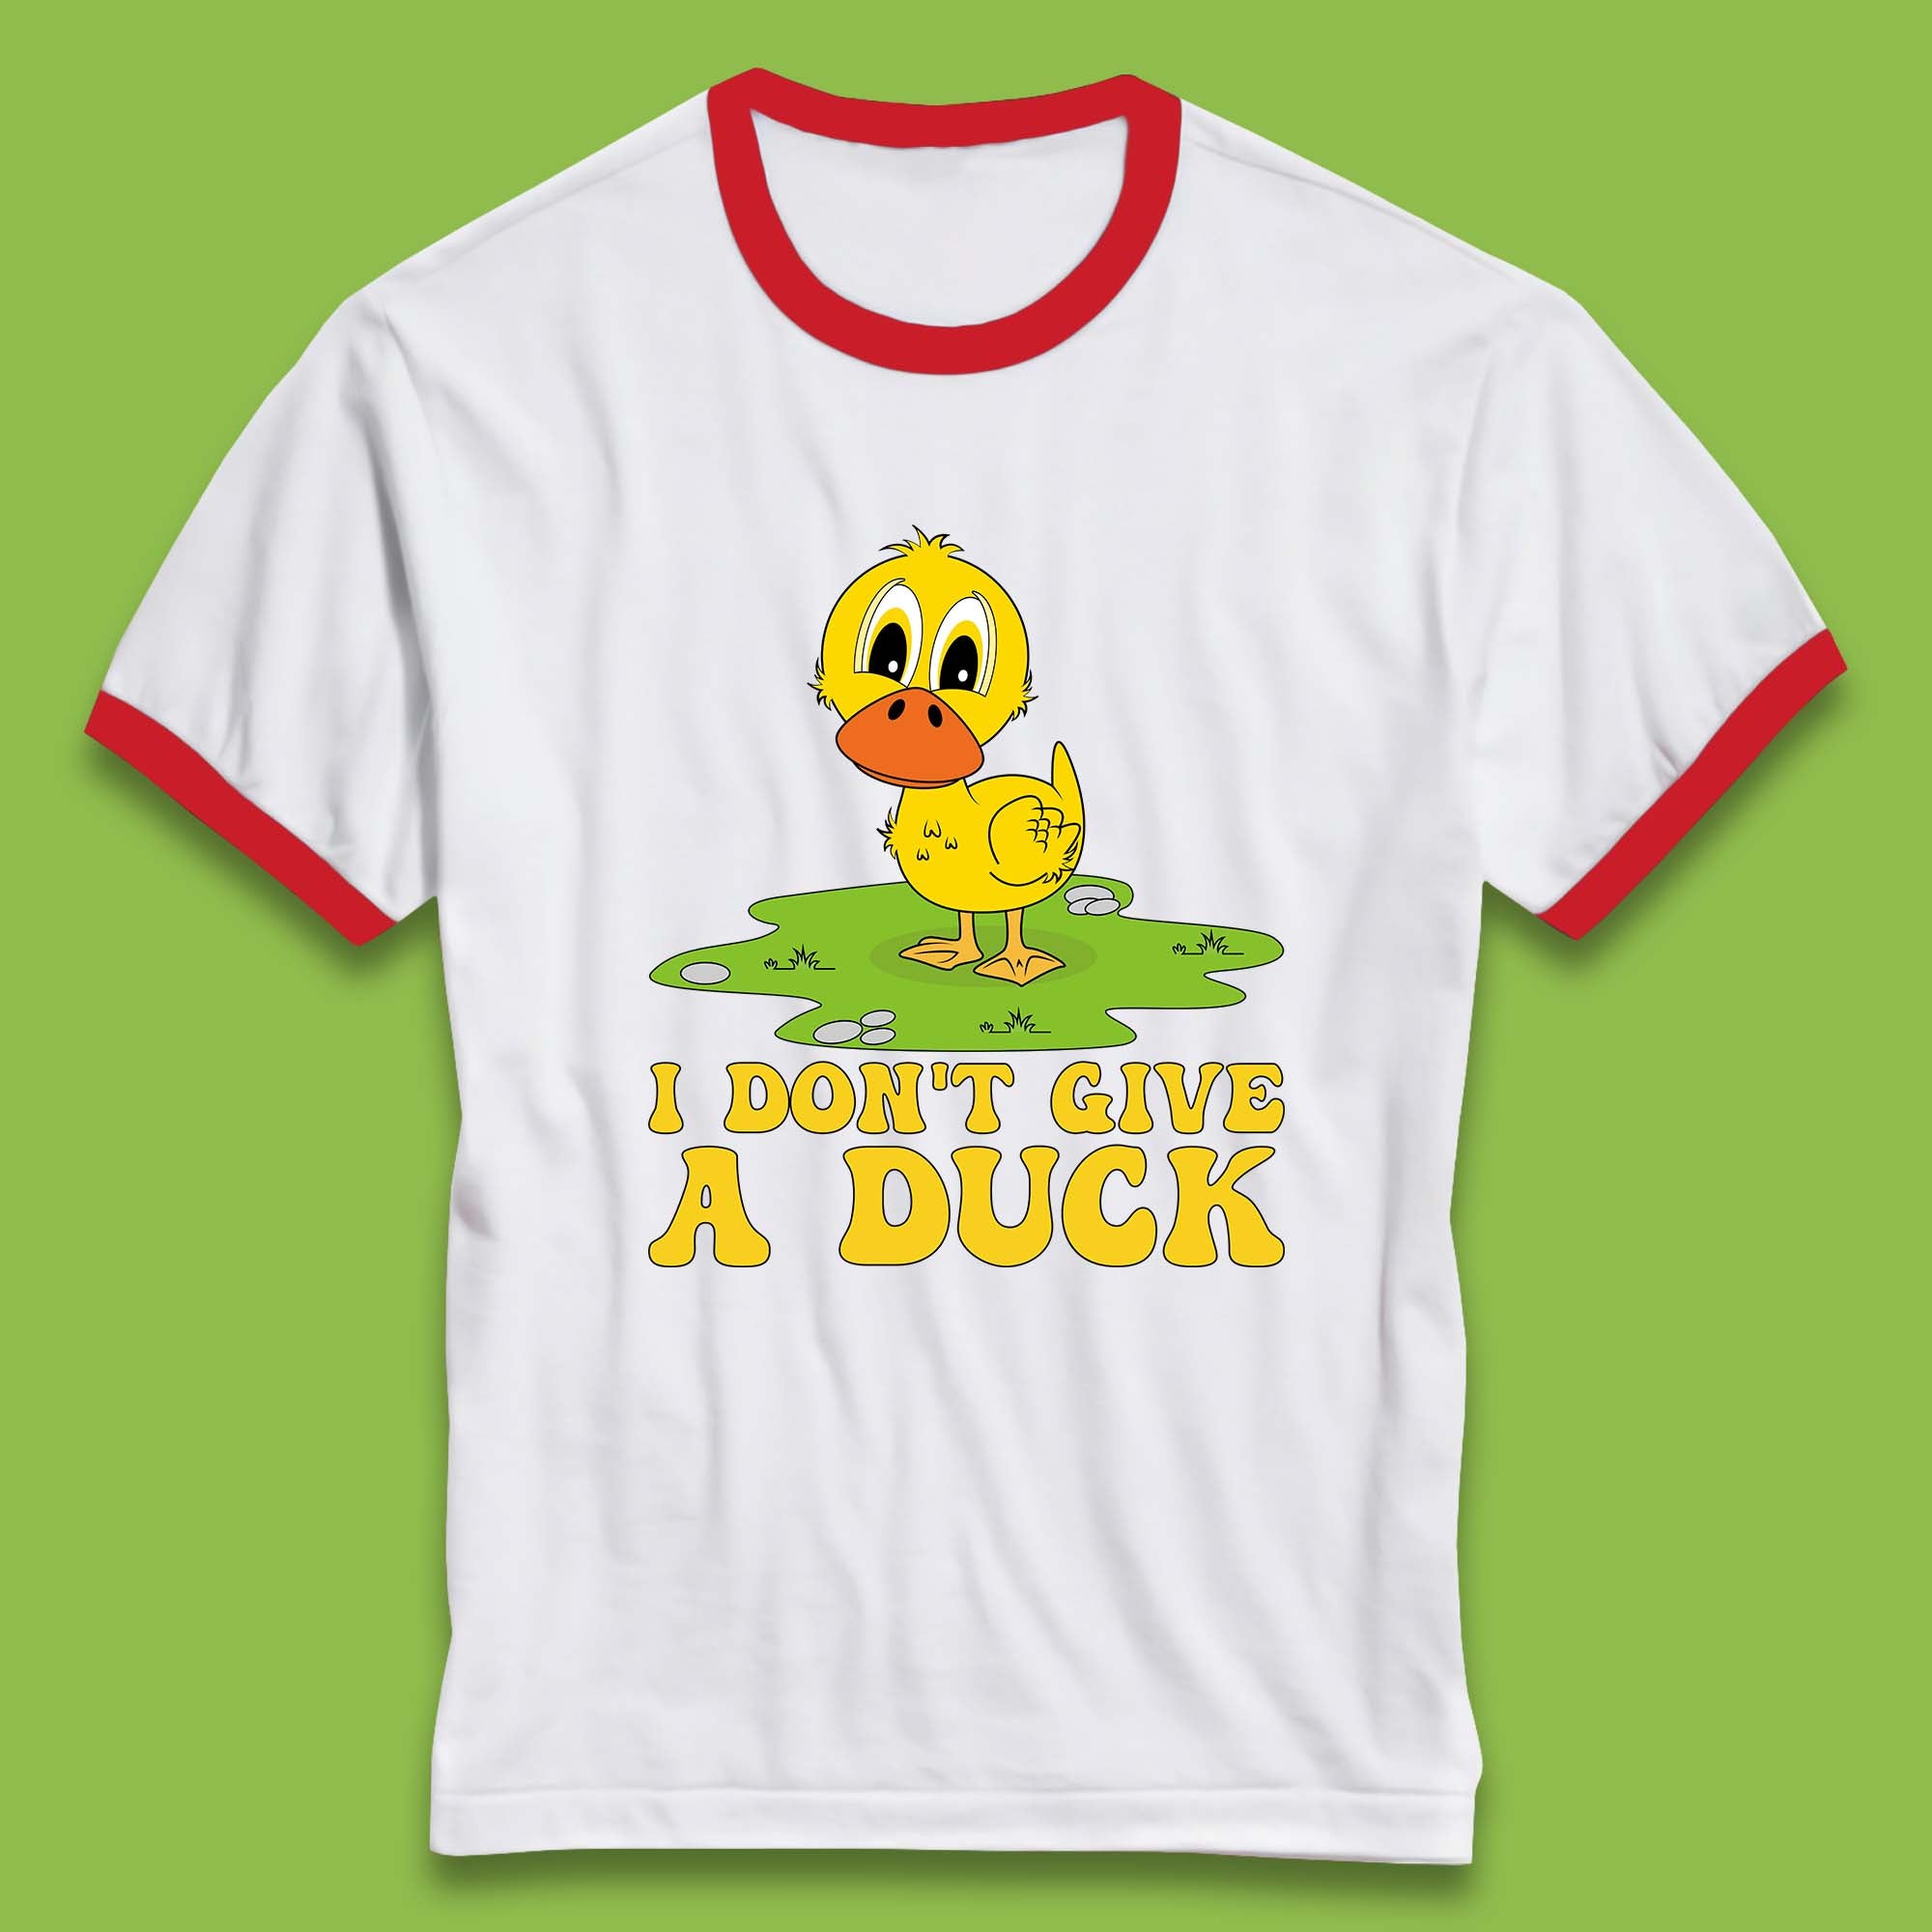 I Don't Give A Duck Funny Humor Rude Joke Novelty Ringer T Shirt